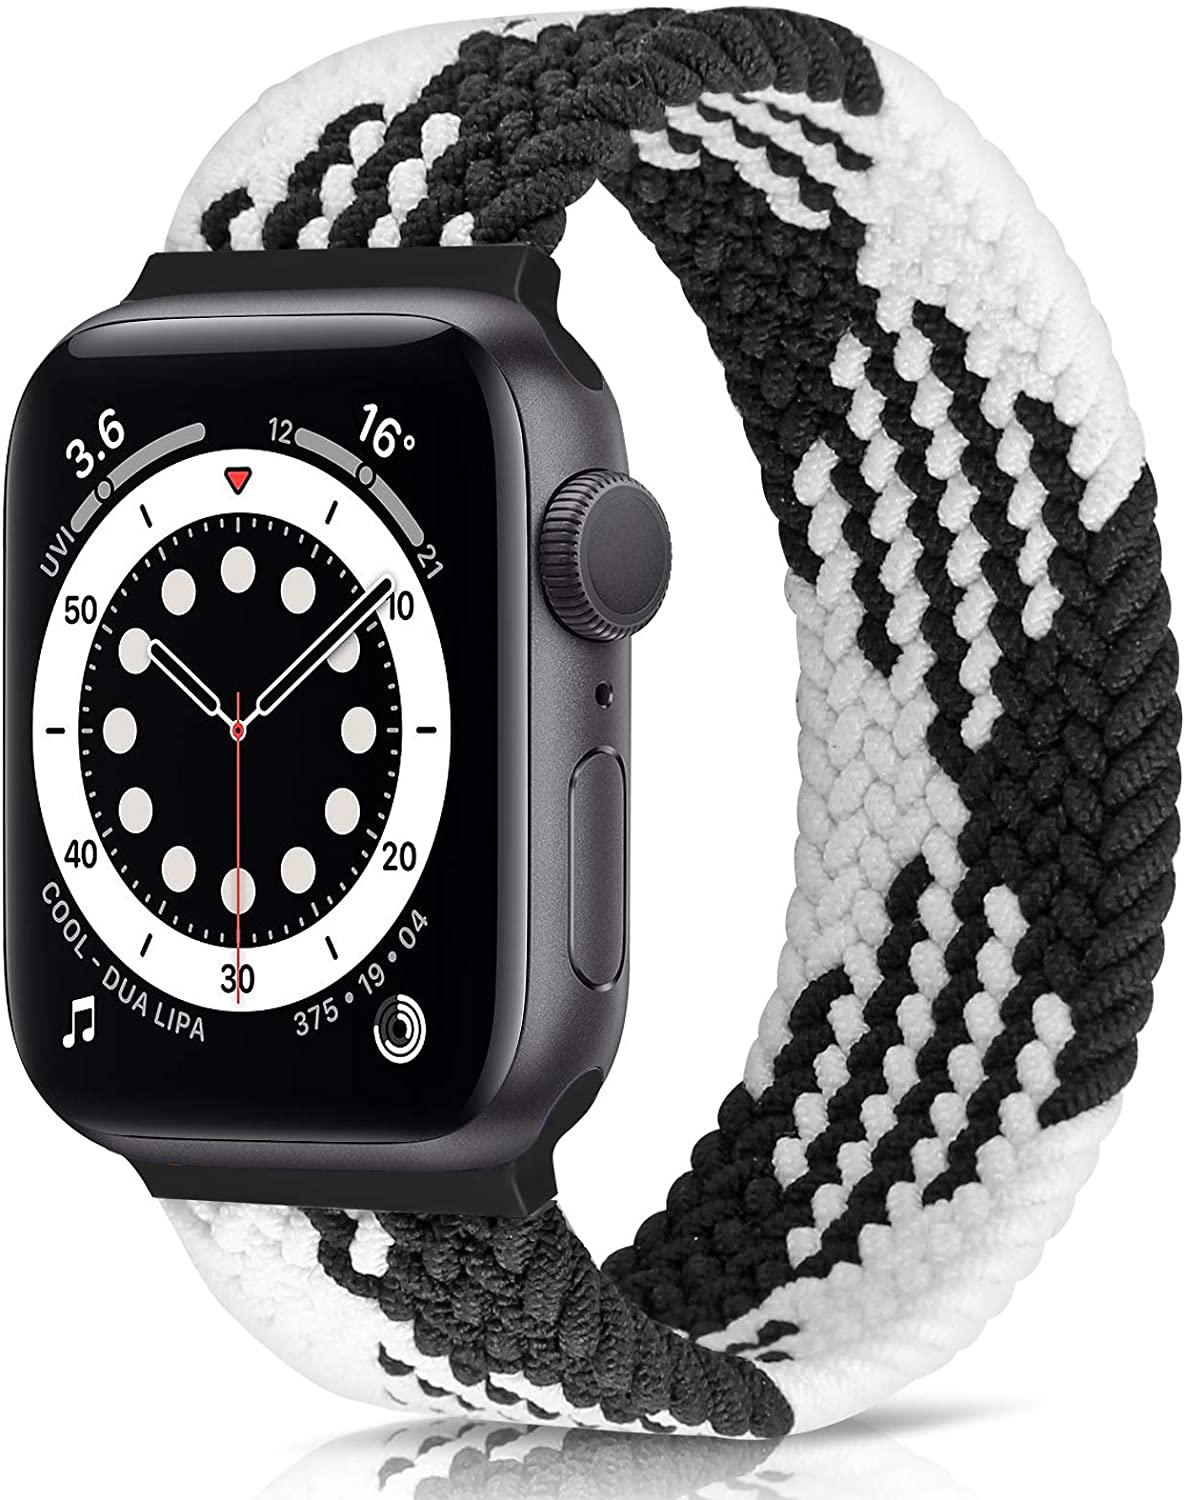 Řemínek iMore Braided Solo Loop Apple Watch Series 1/2/3 42mm - zebra (L)